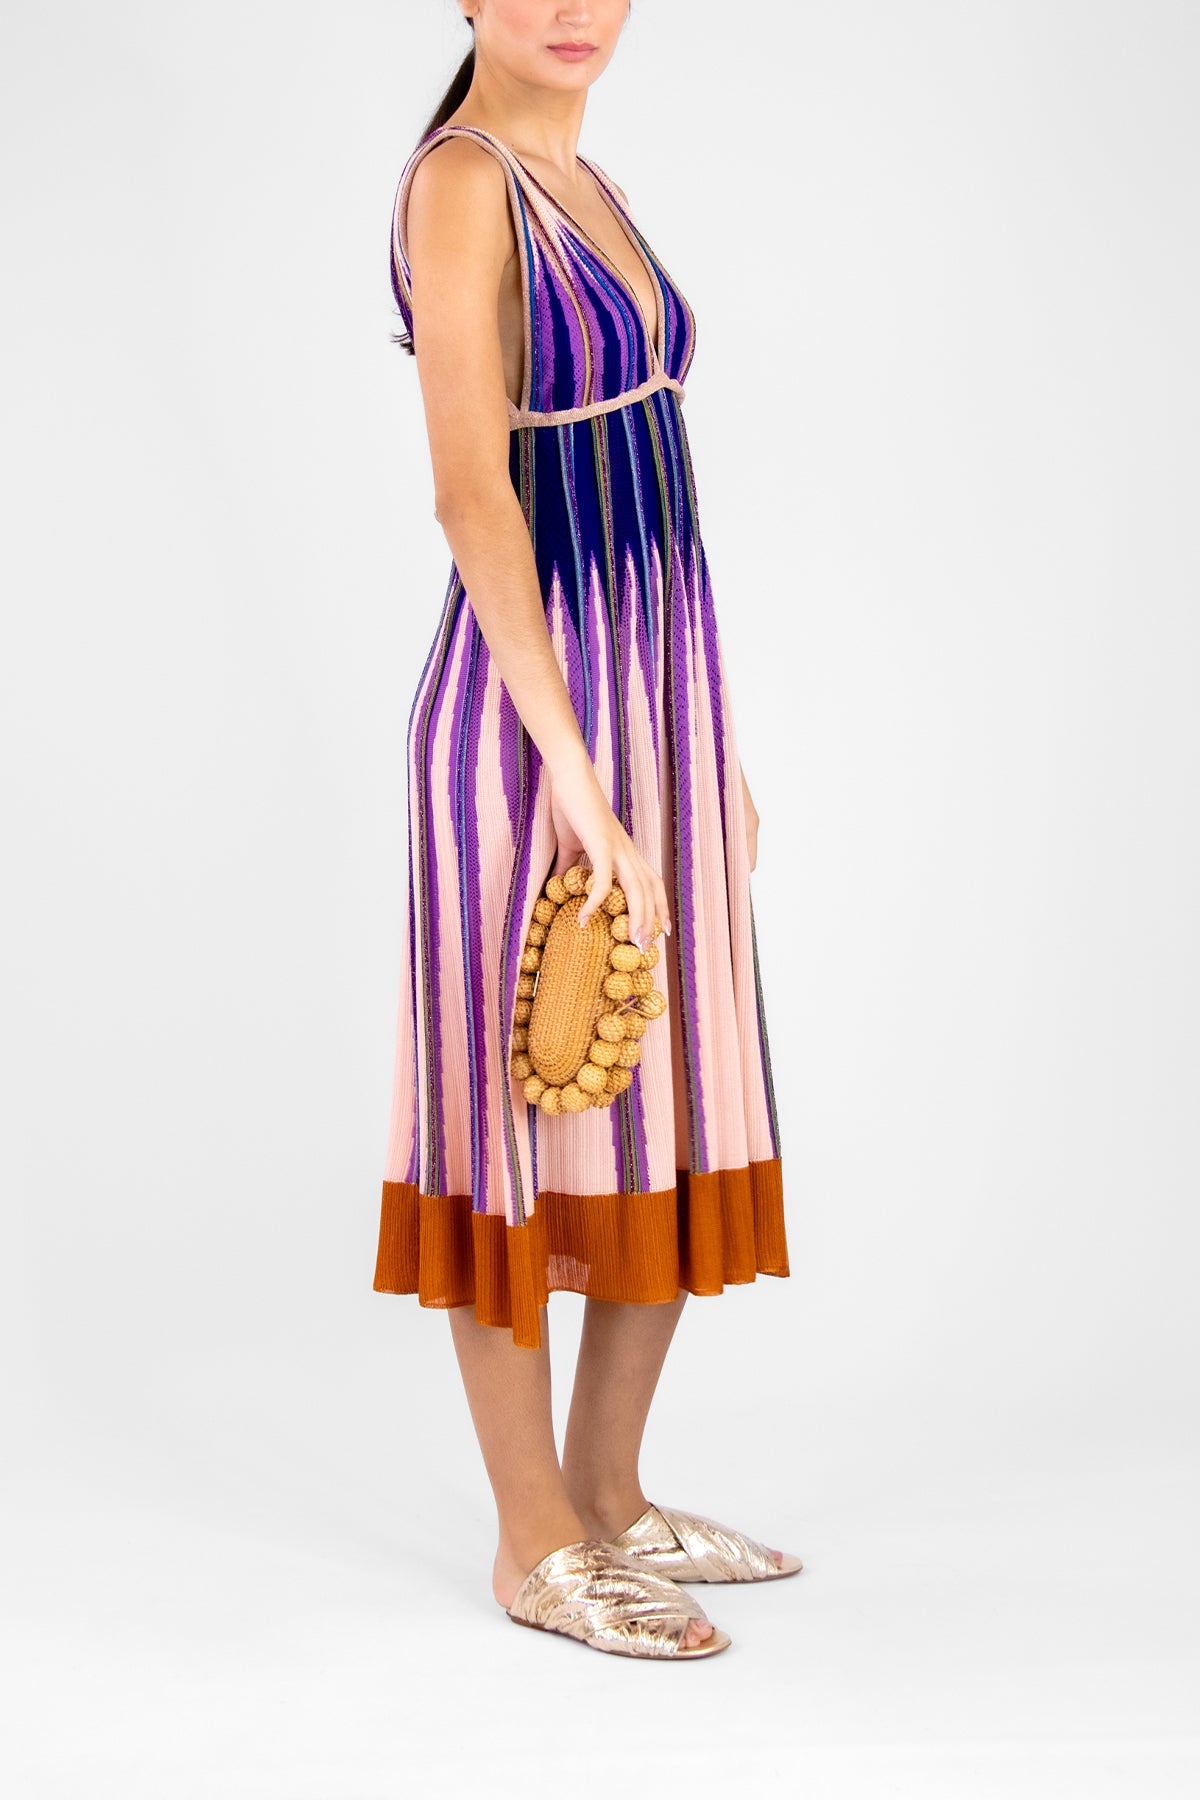 "Dancing Constellation" Intarsia Dress in Electric - shop-olivia.com